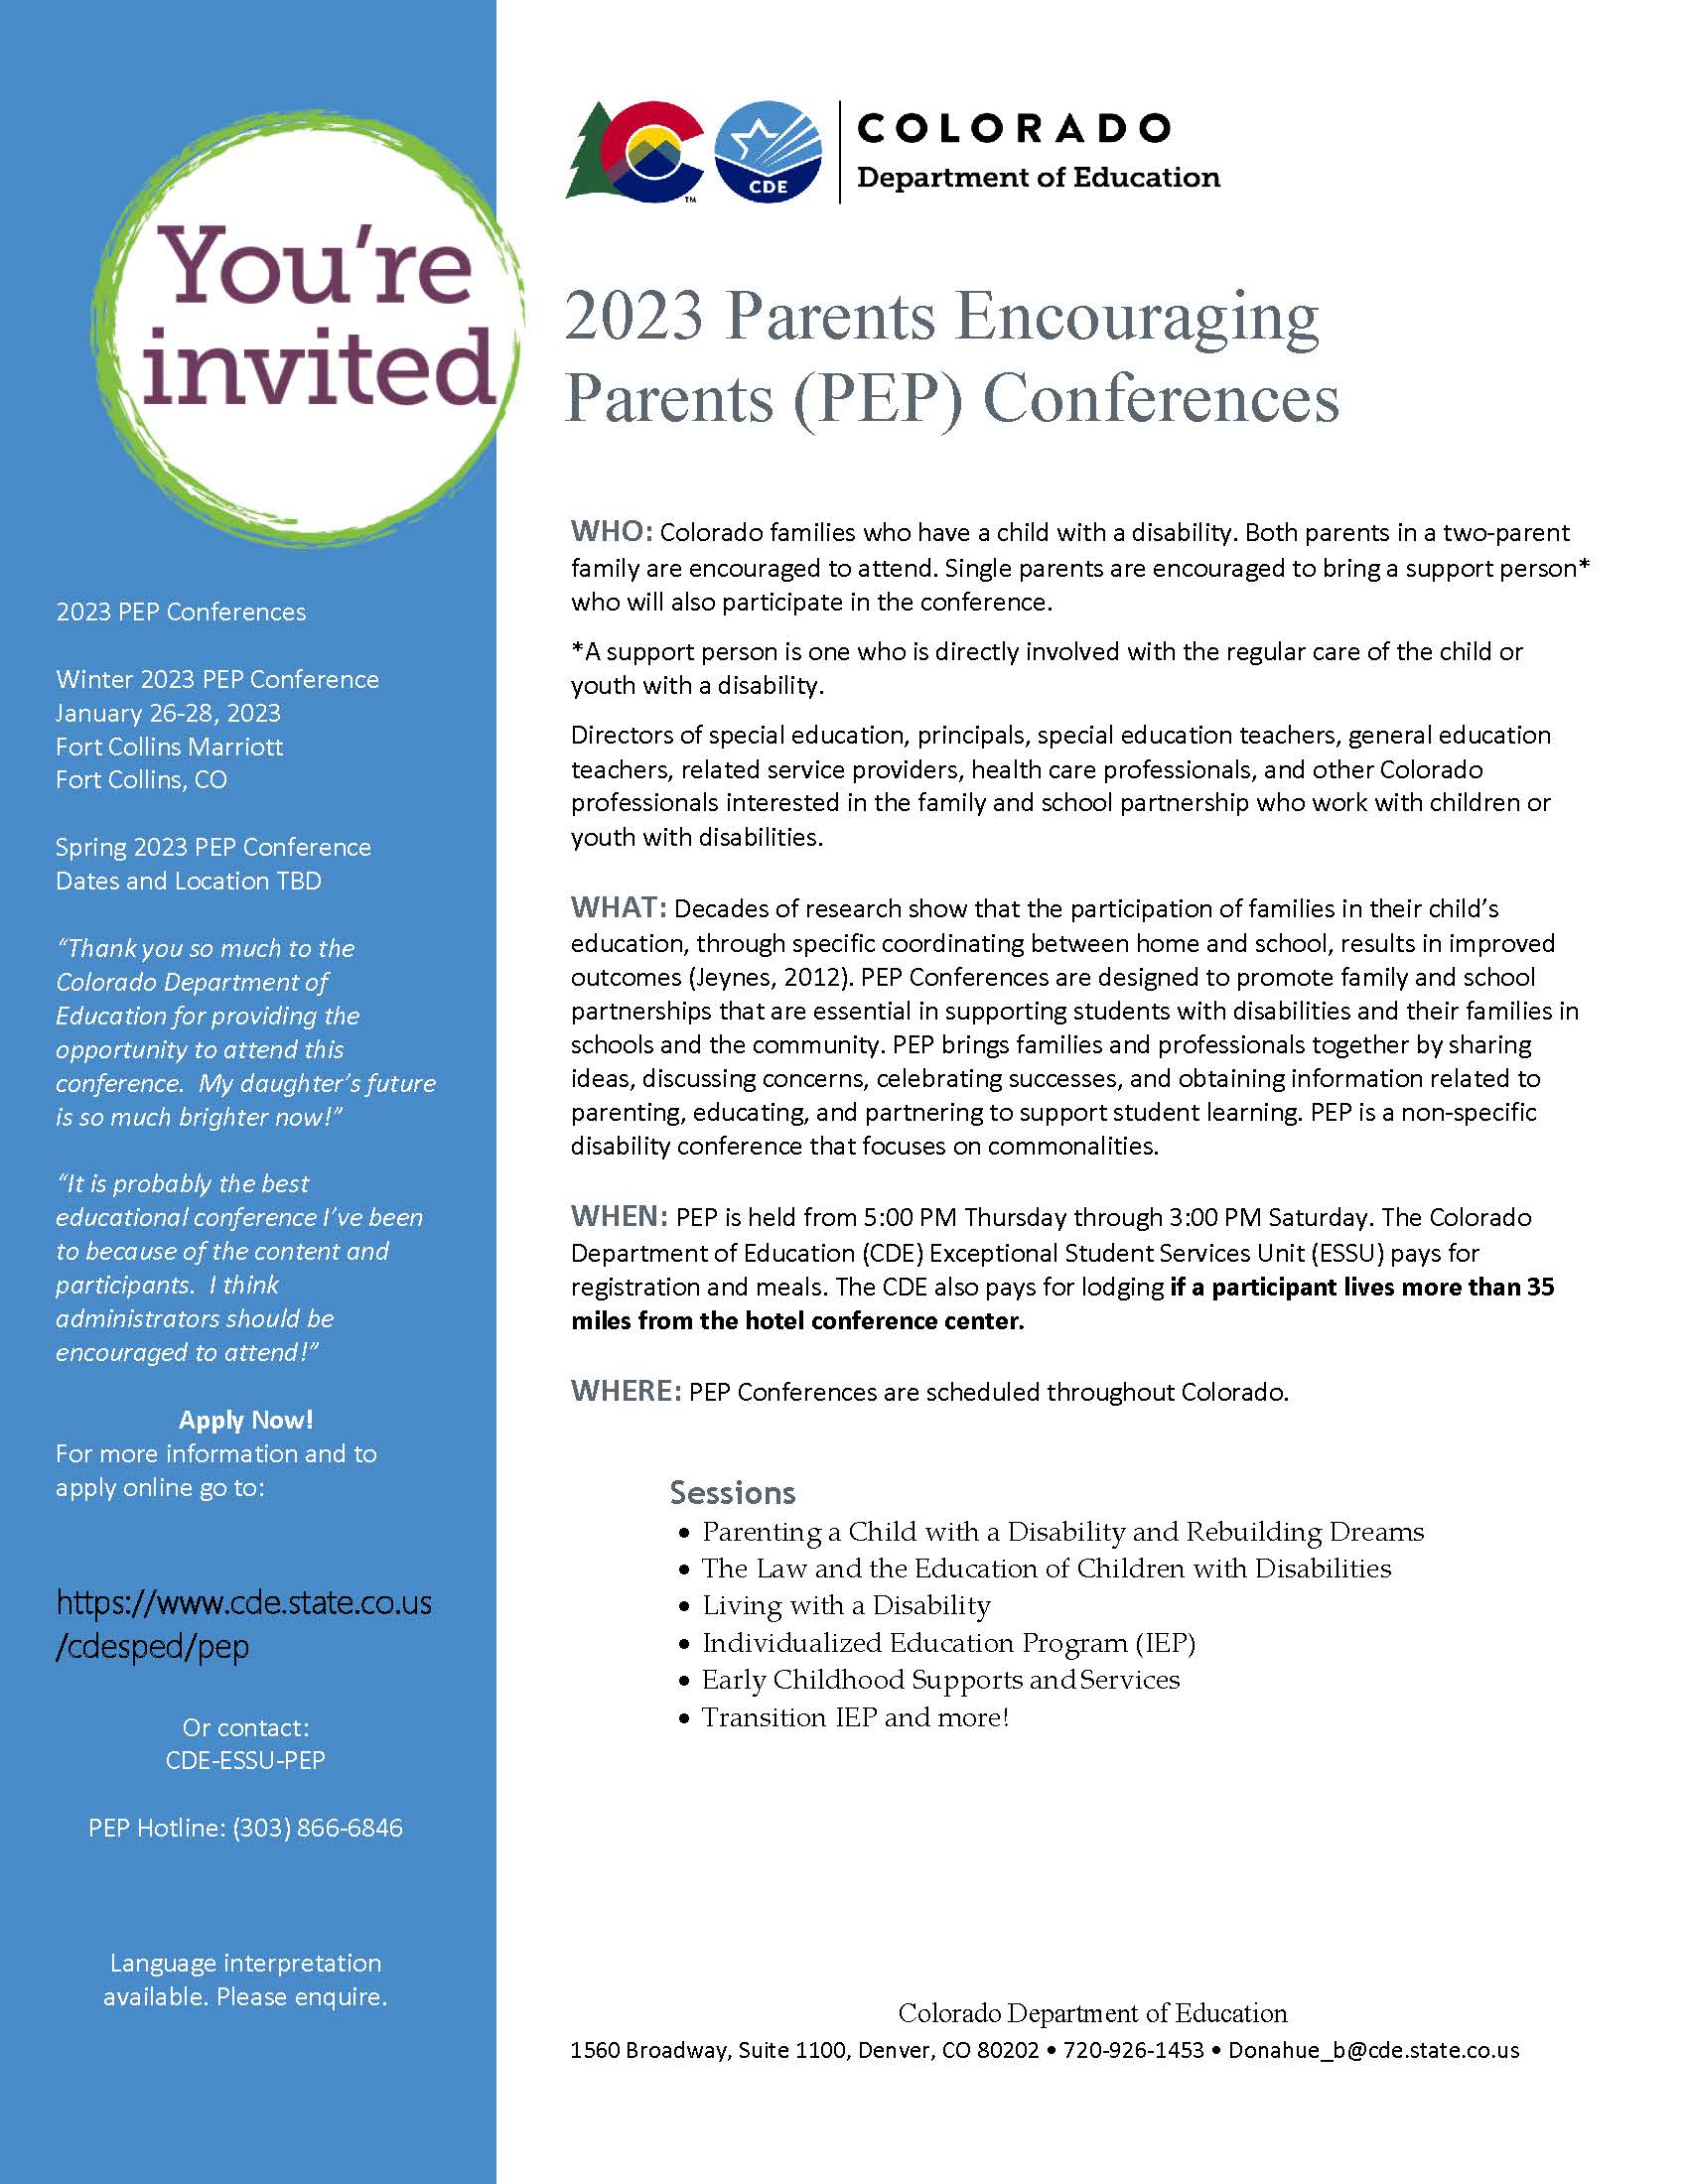 Colorado Department of Education  Parents Encouraging Parents Academy Flyer English Version